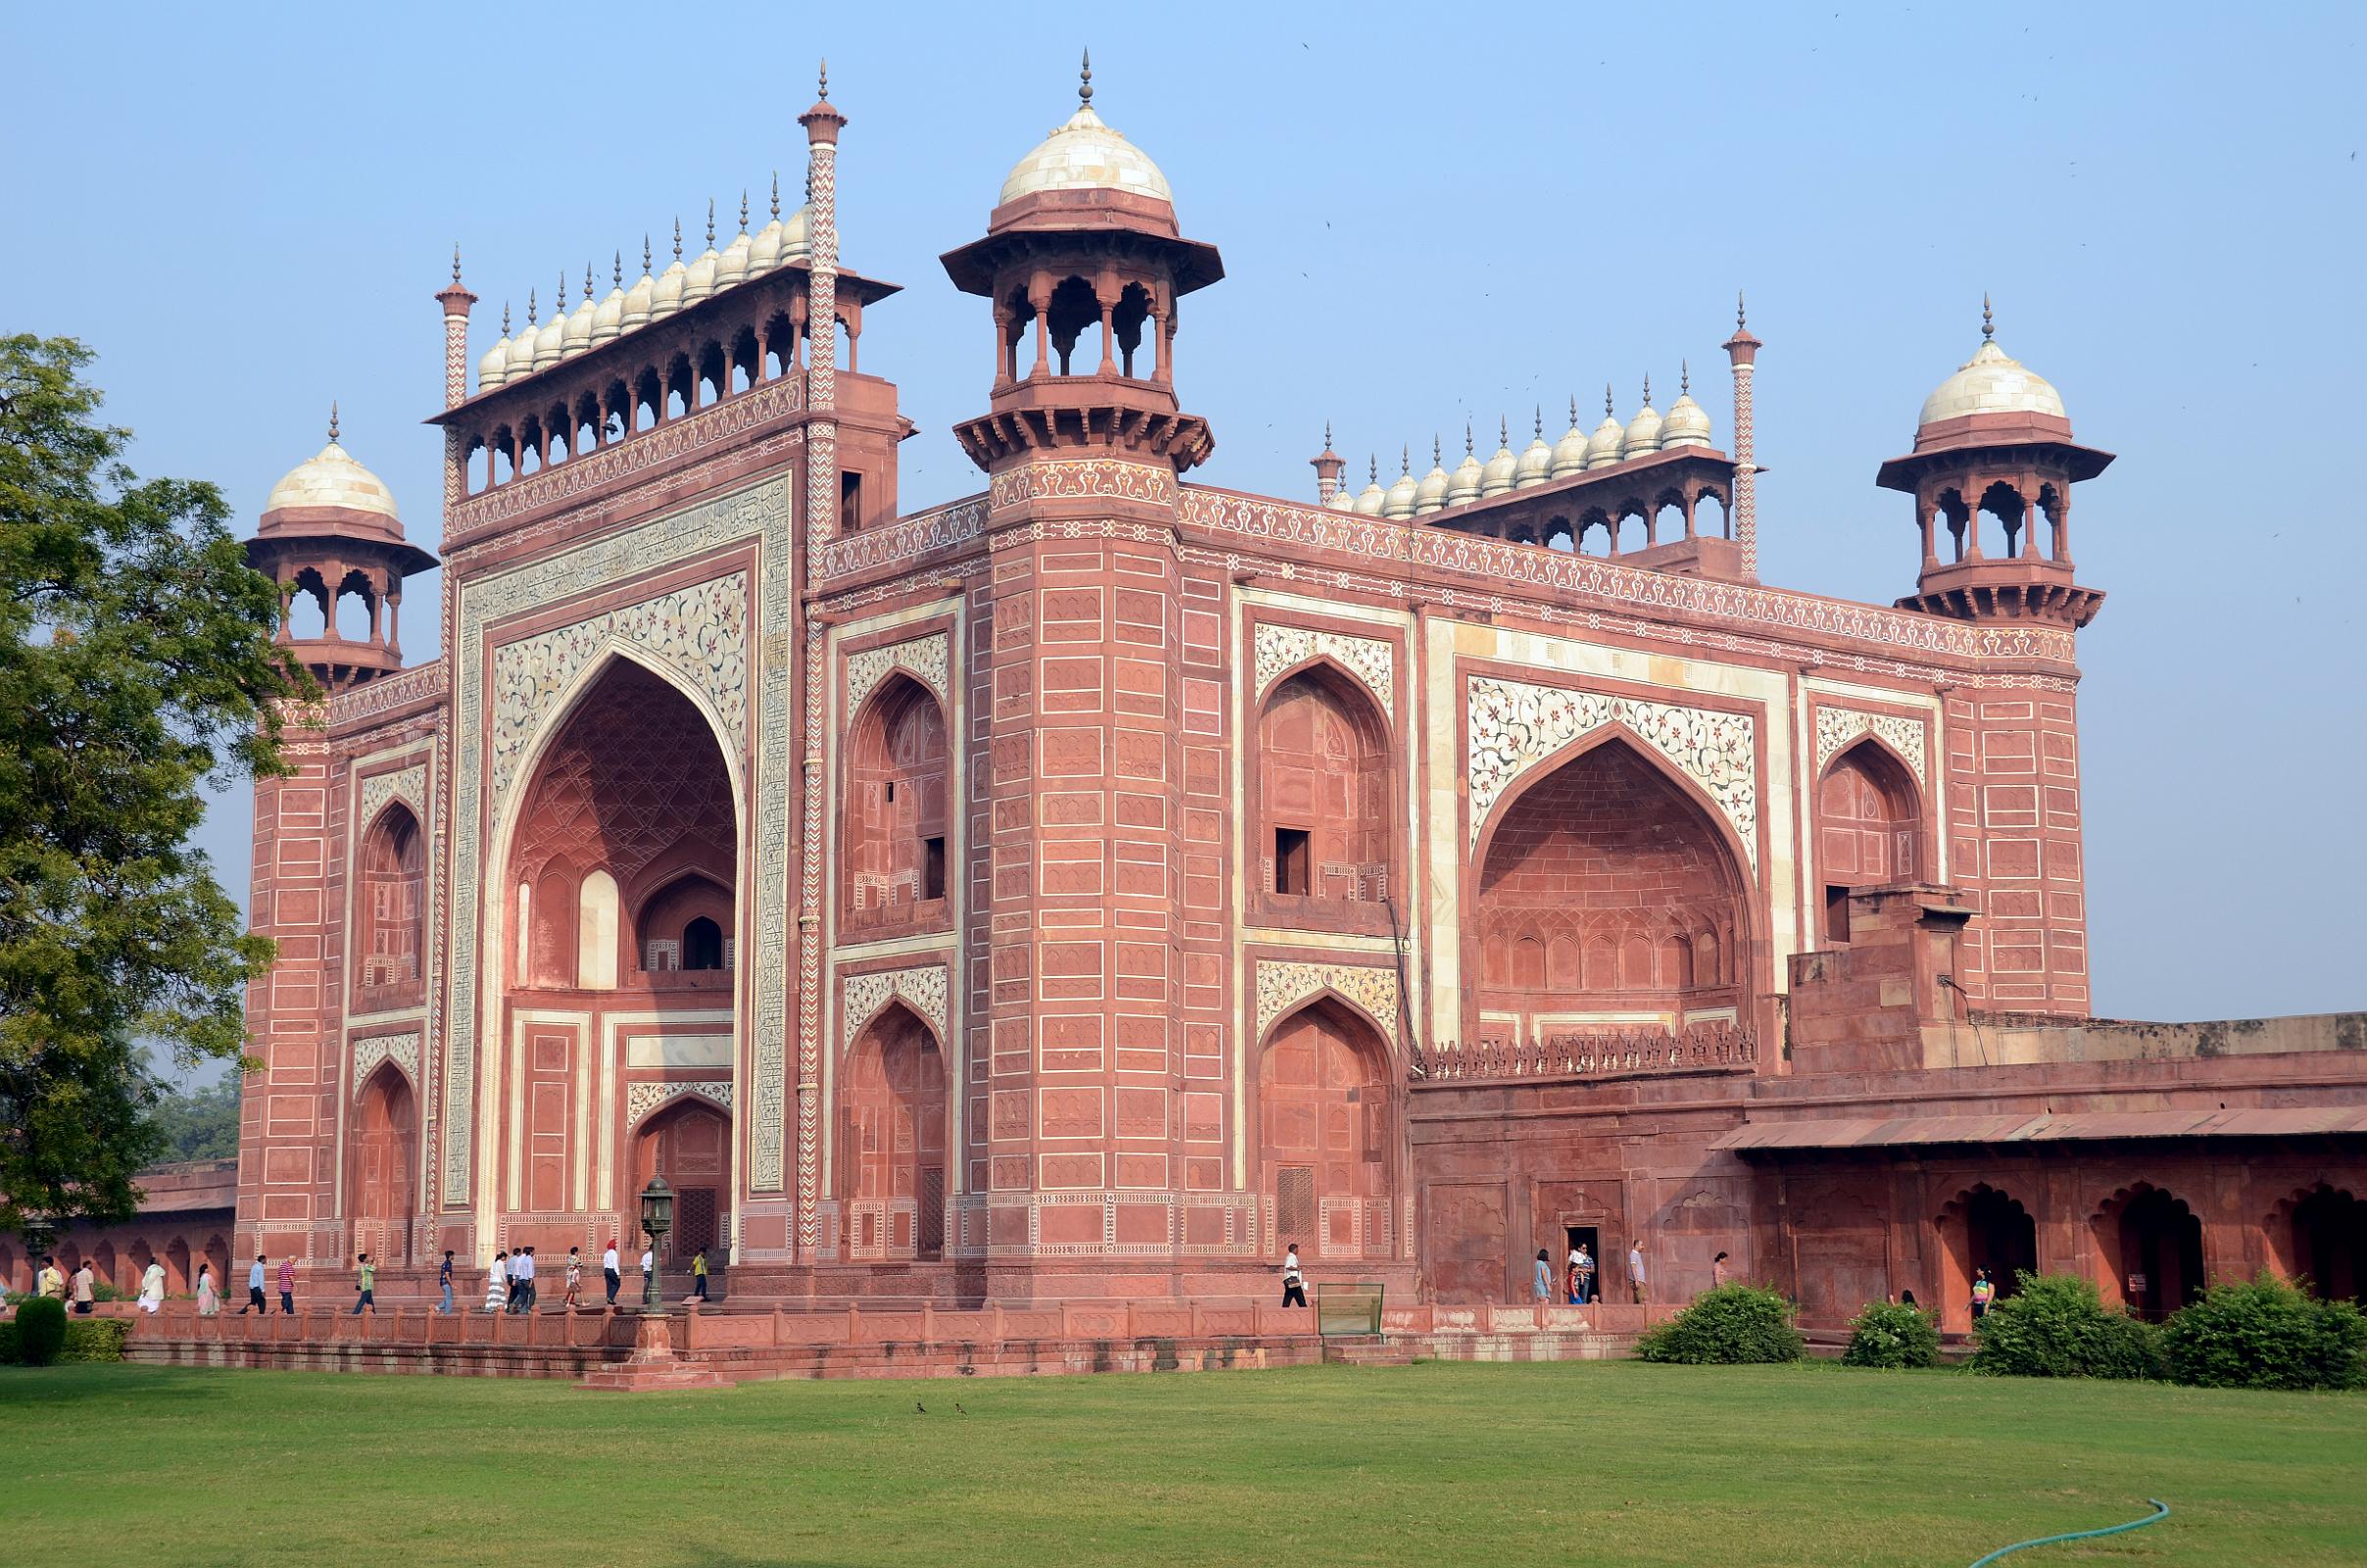 http://s6.picofile.com/file/8196926492/Agra_Taj_Mahal_01_The_Entrance_To_The_Taj_Mahal_Is_Through_The_Darwaza_Great_Gate.jpg